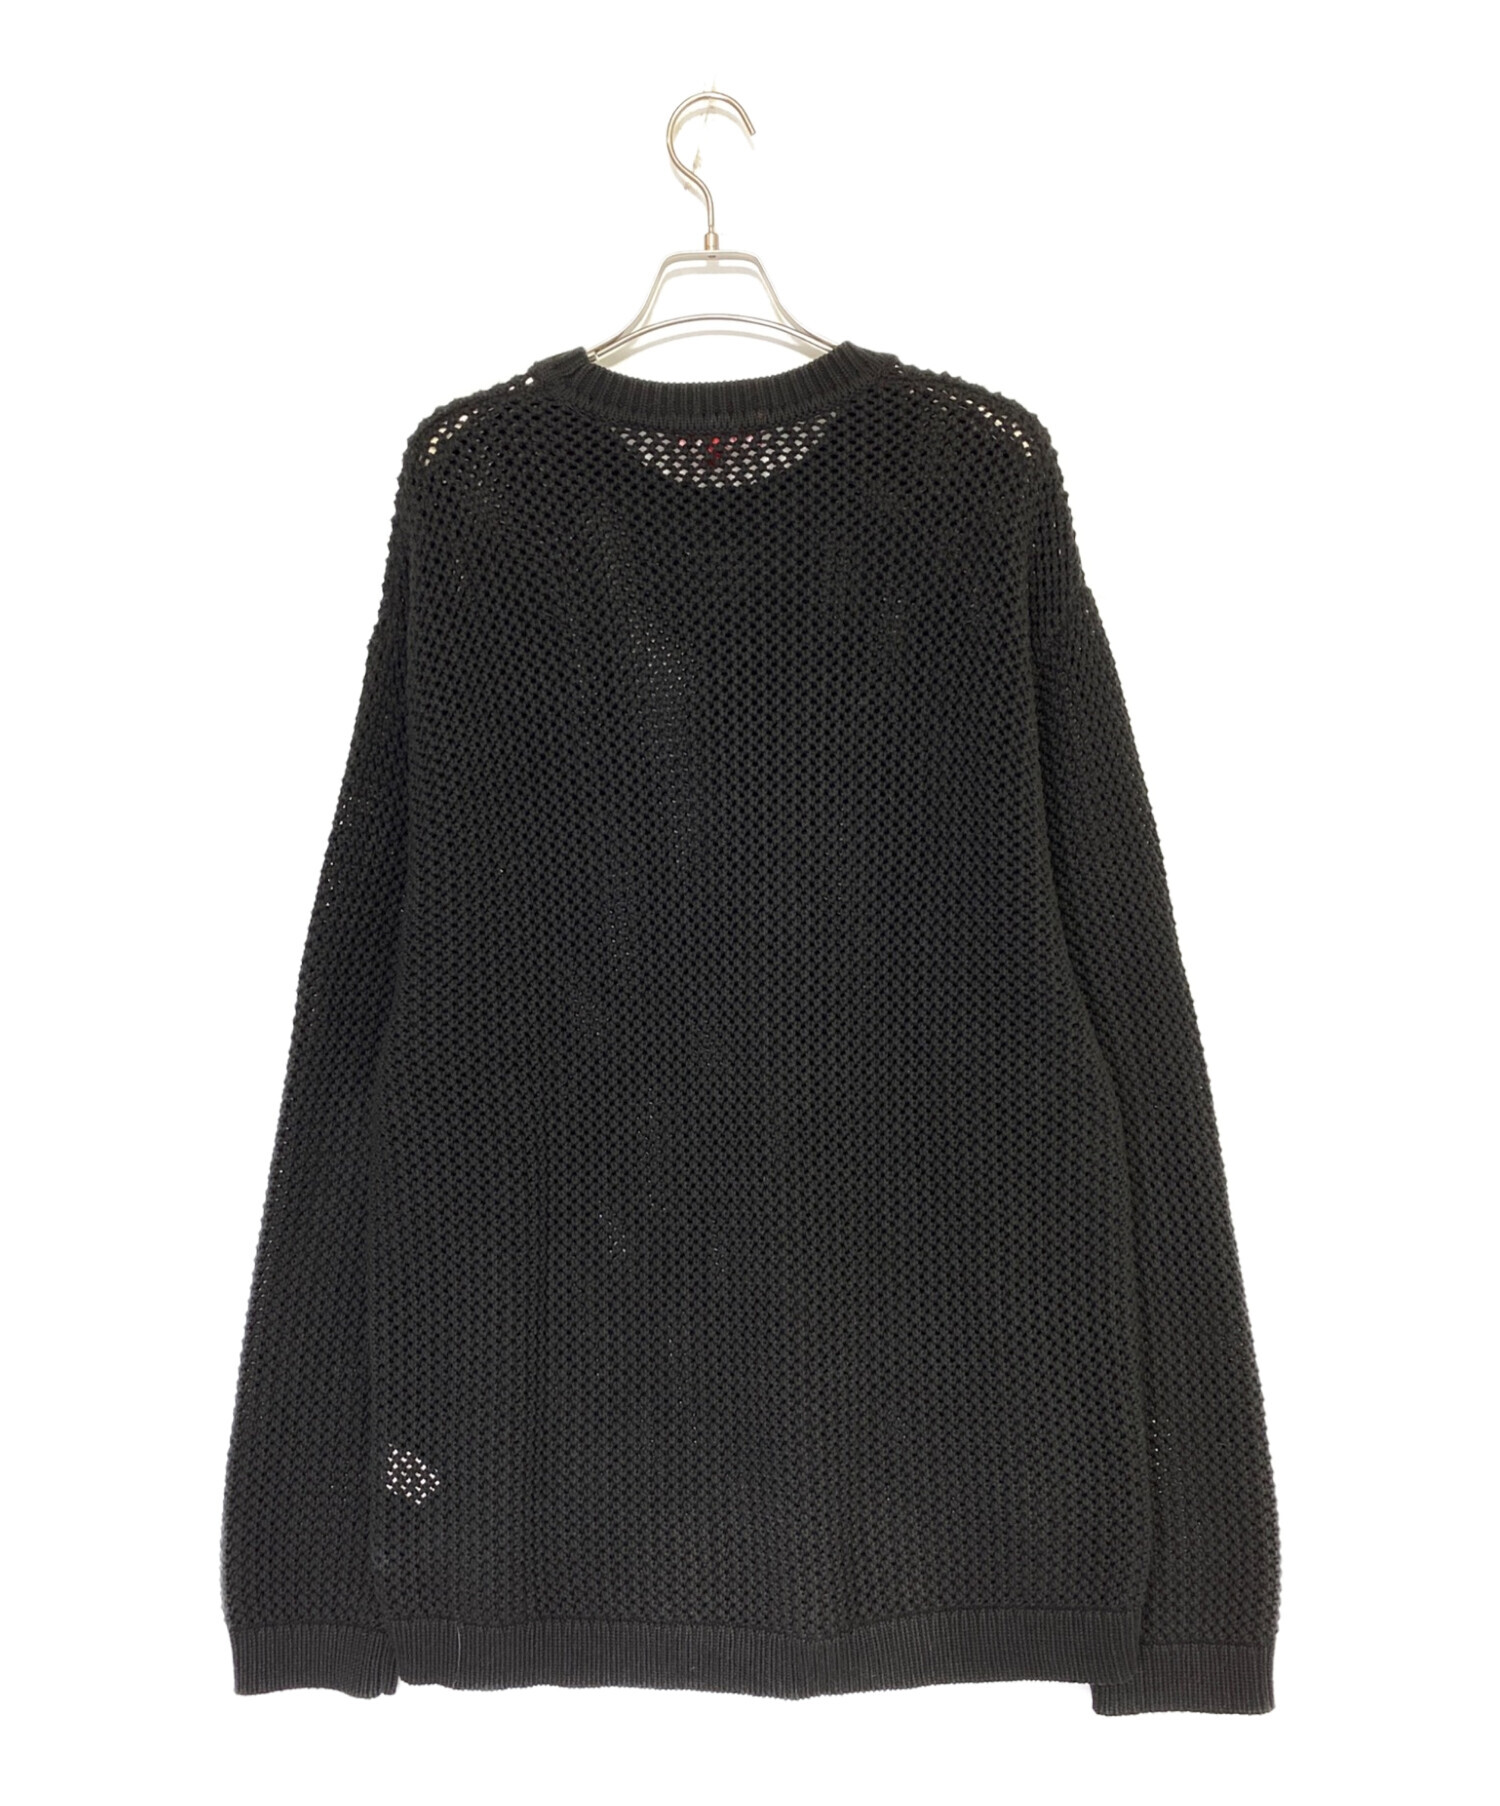 SUPREME (シュプリーム) Open Knit Small Box Logo Sweater ブラック サイズ:XL